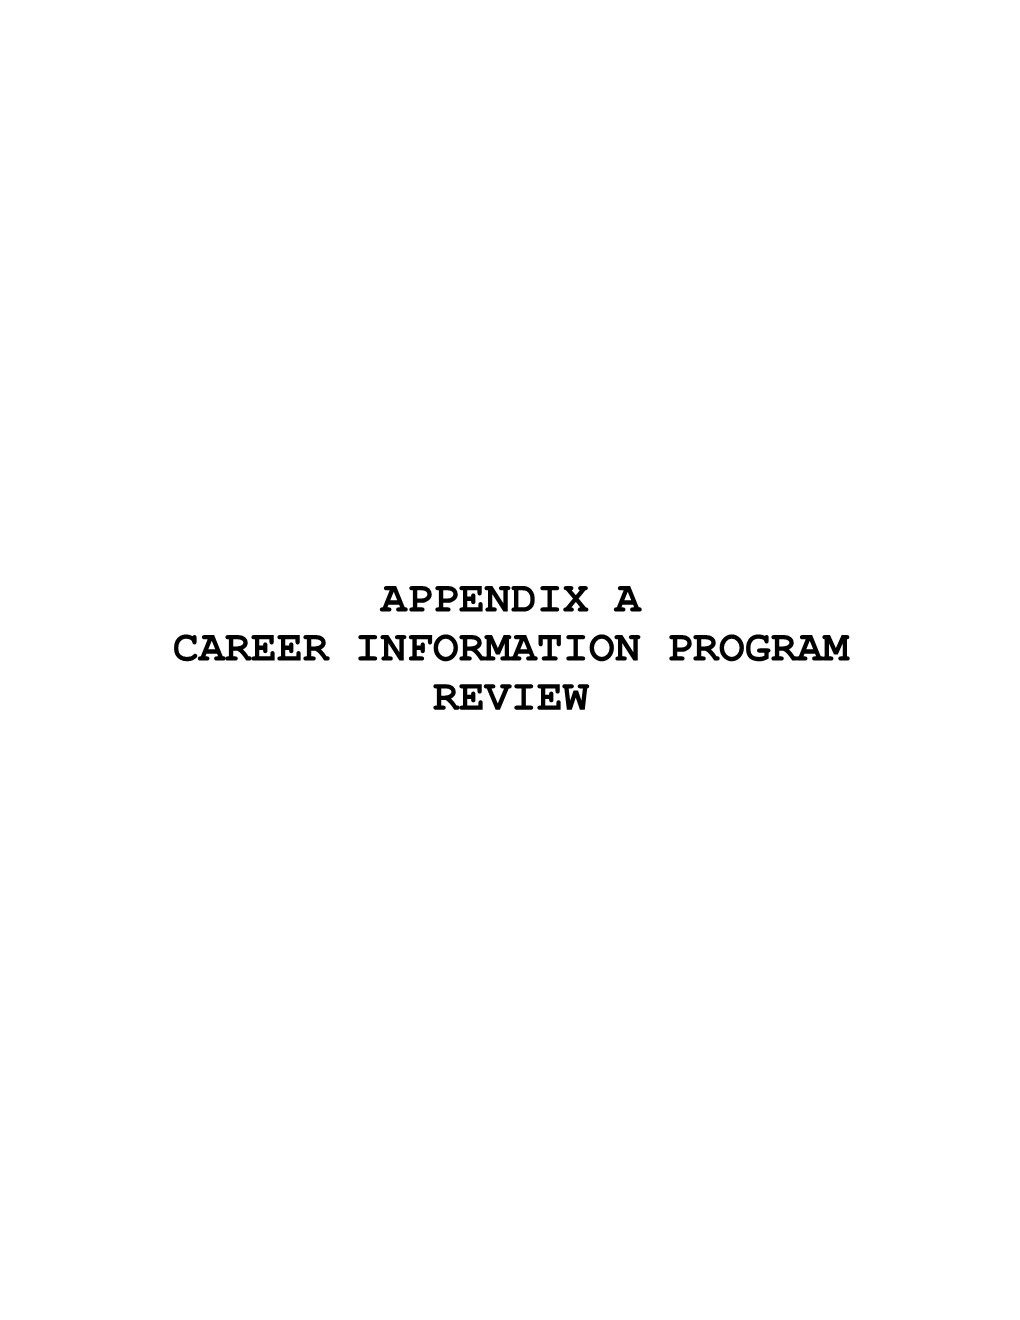 Career Information Program